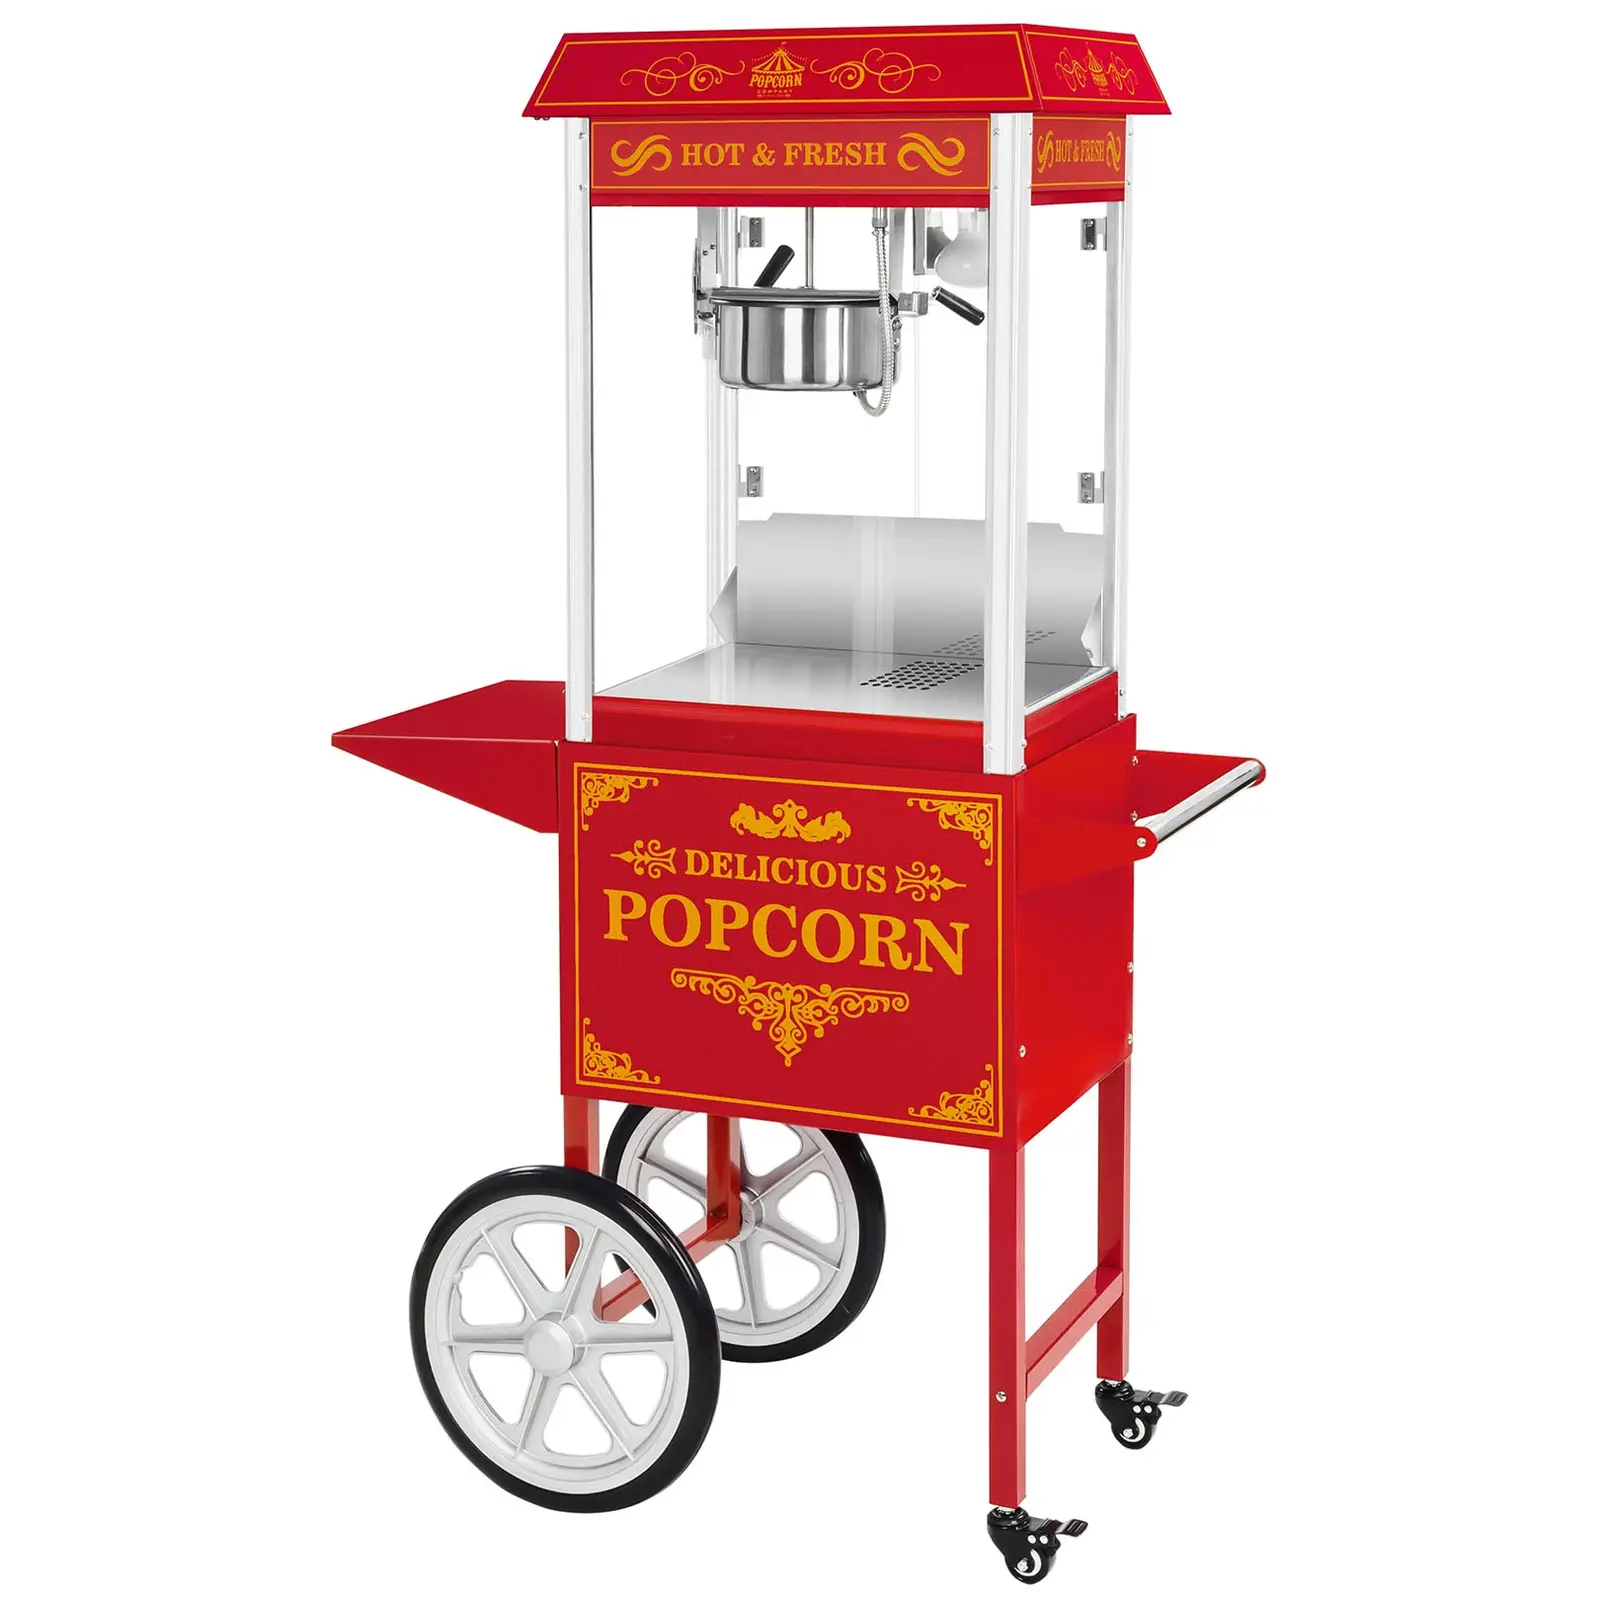 Popcornmaskin med vagn - Retrodesign - Röd